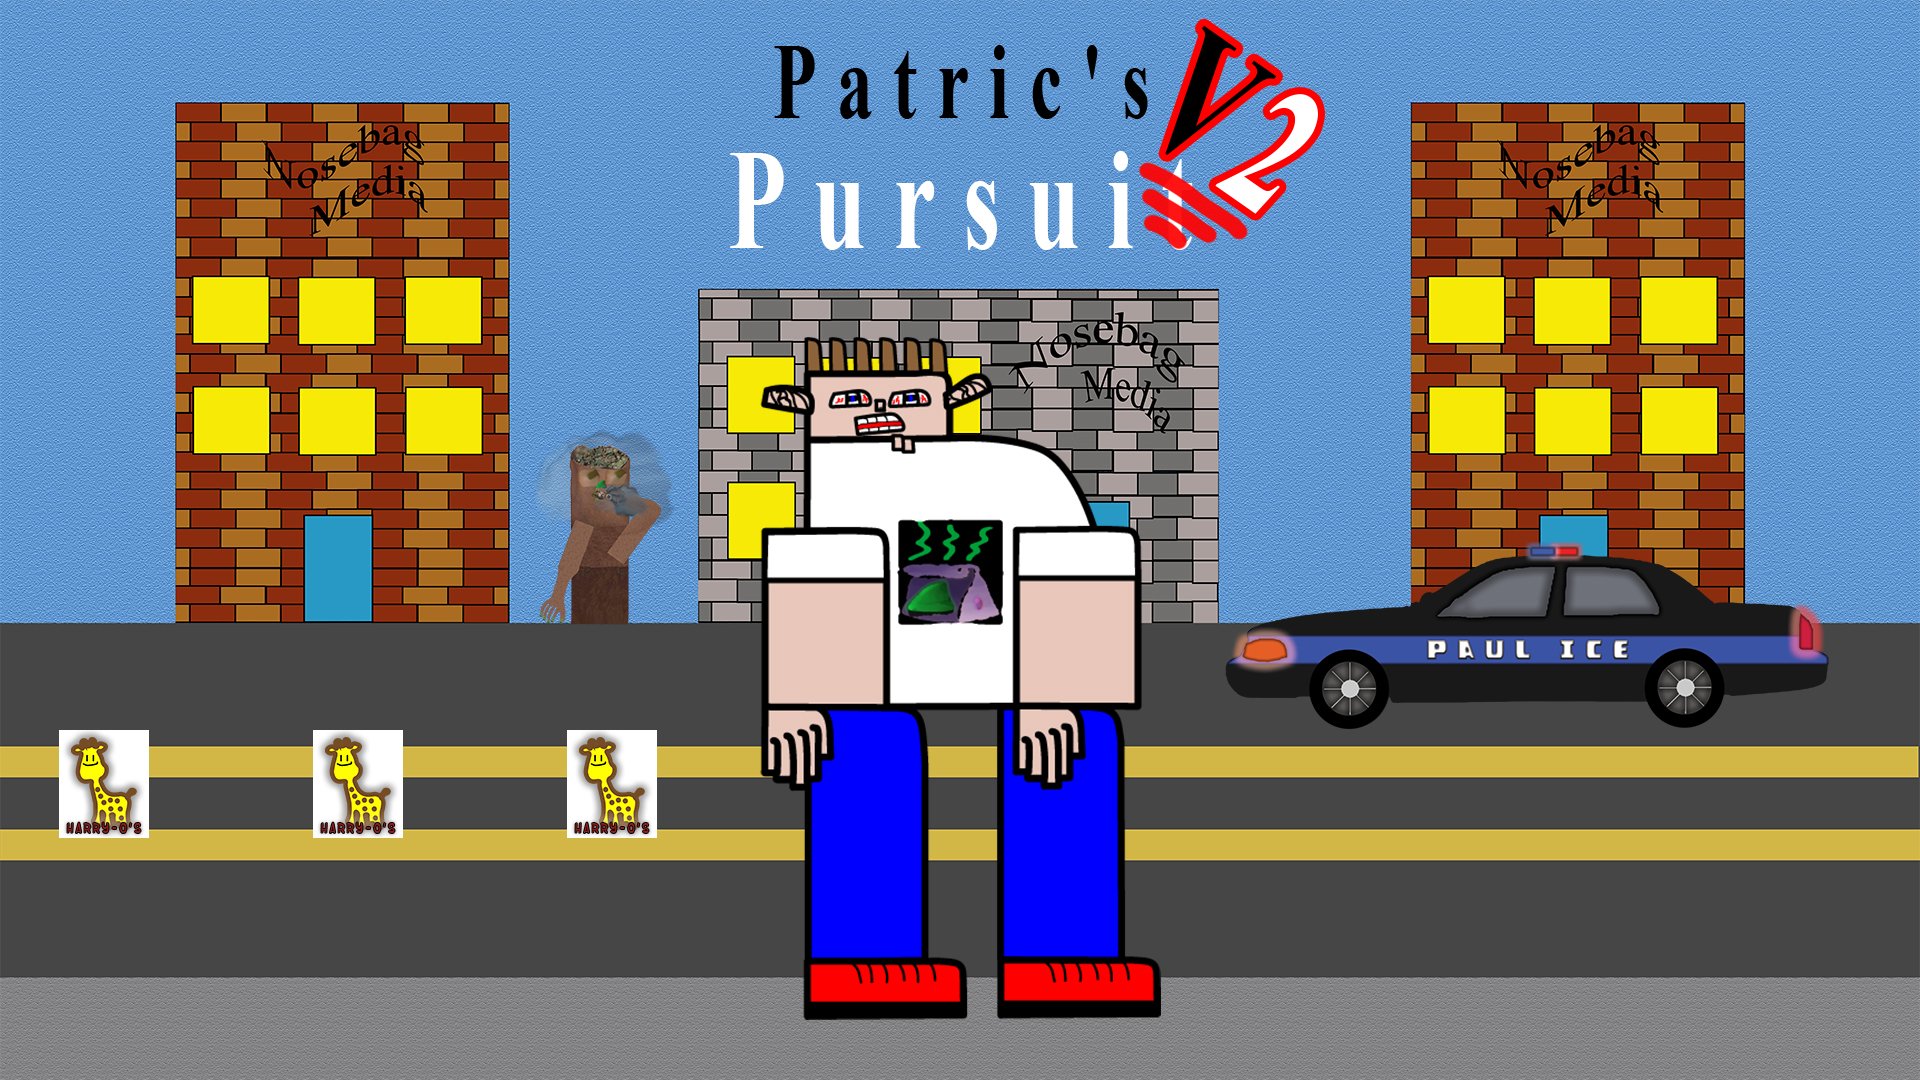 Poster for Patric's Pursuit V2, a platformer game by Cameron Whitaker from Nosebag Media.